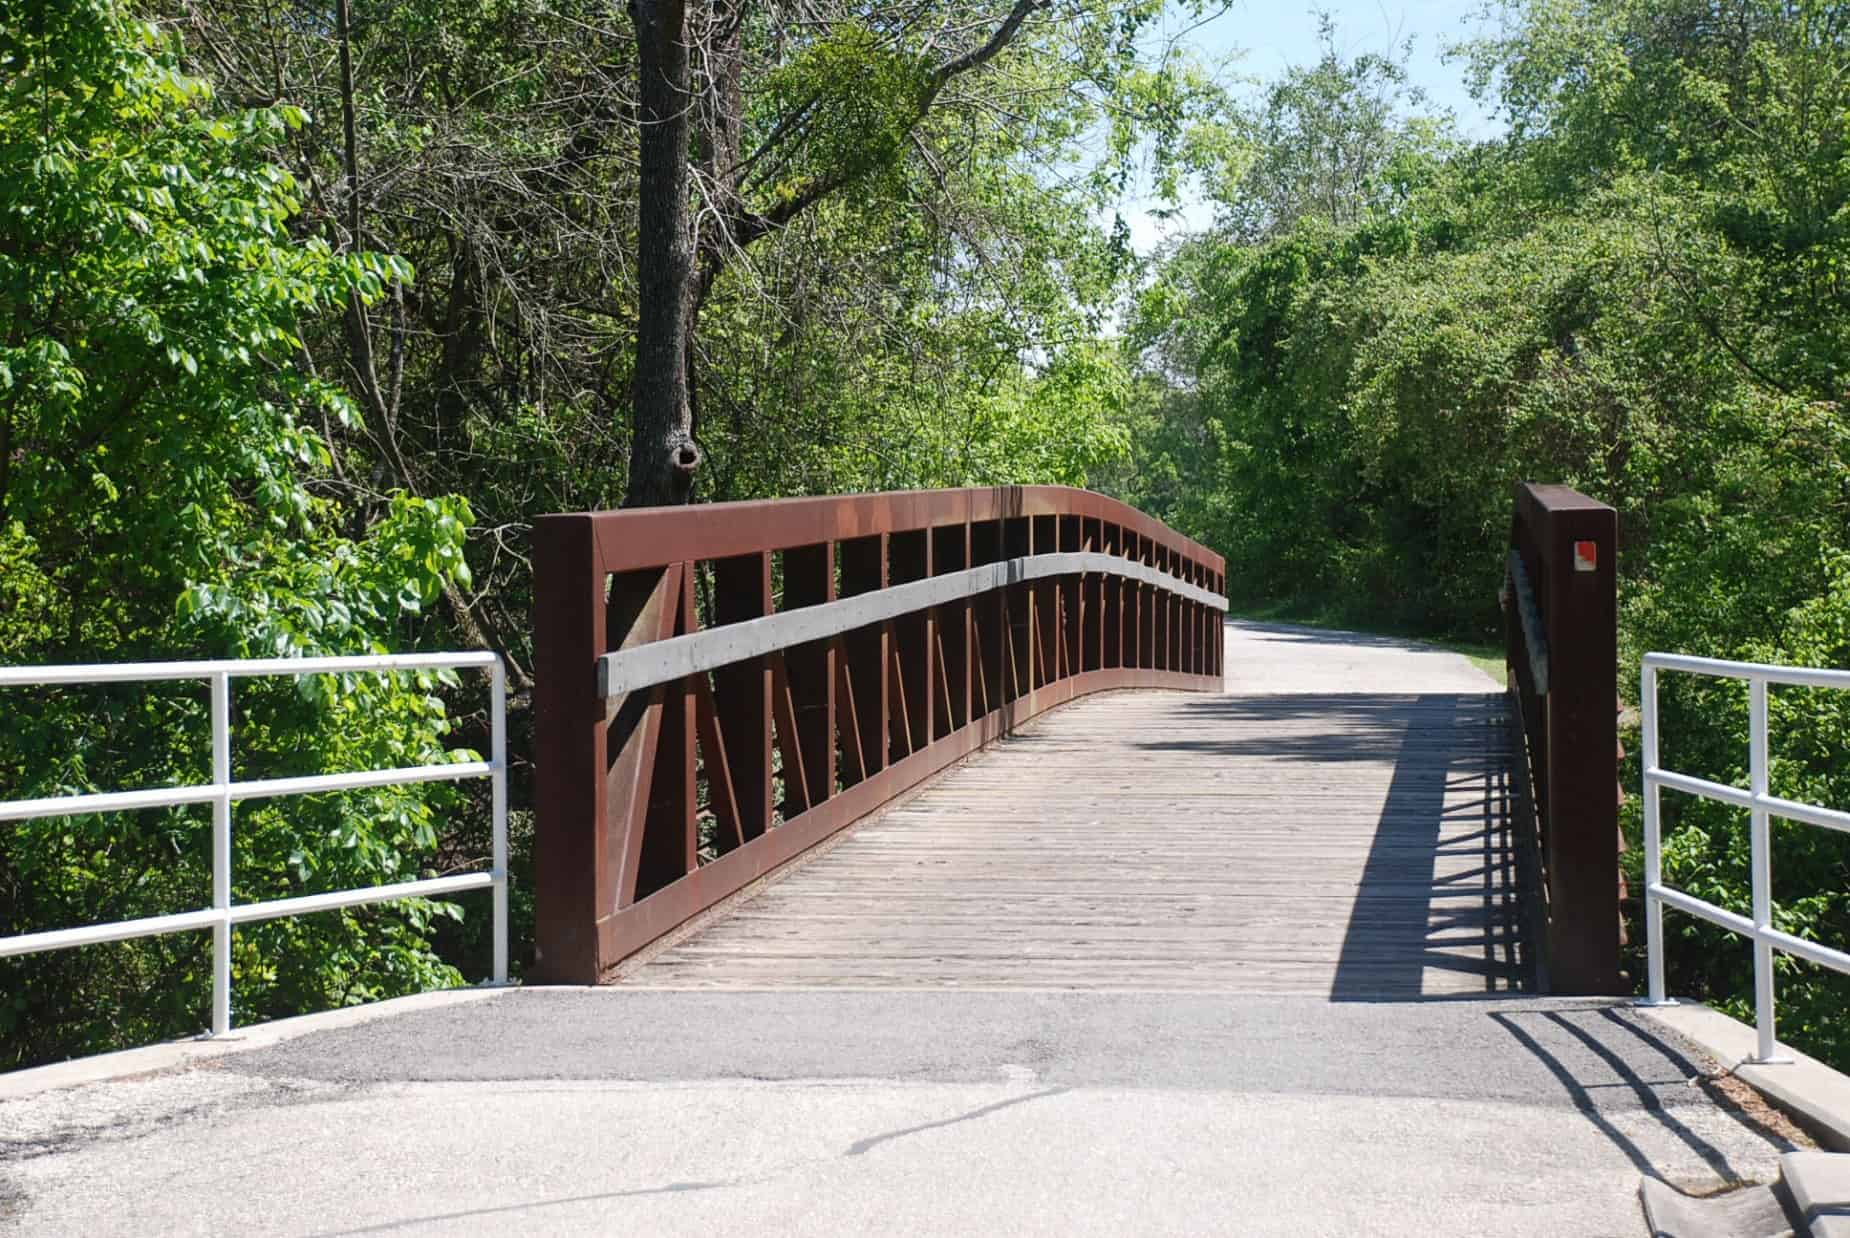 Terry Hershey Park Houston TX Hike & Bike trail bridge over entering drainage channels into Buffalo Bayou